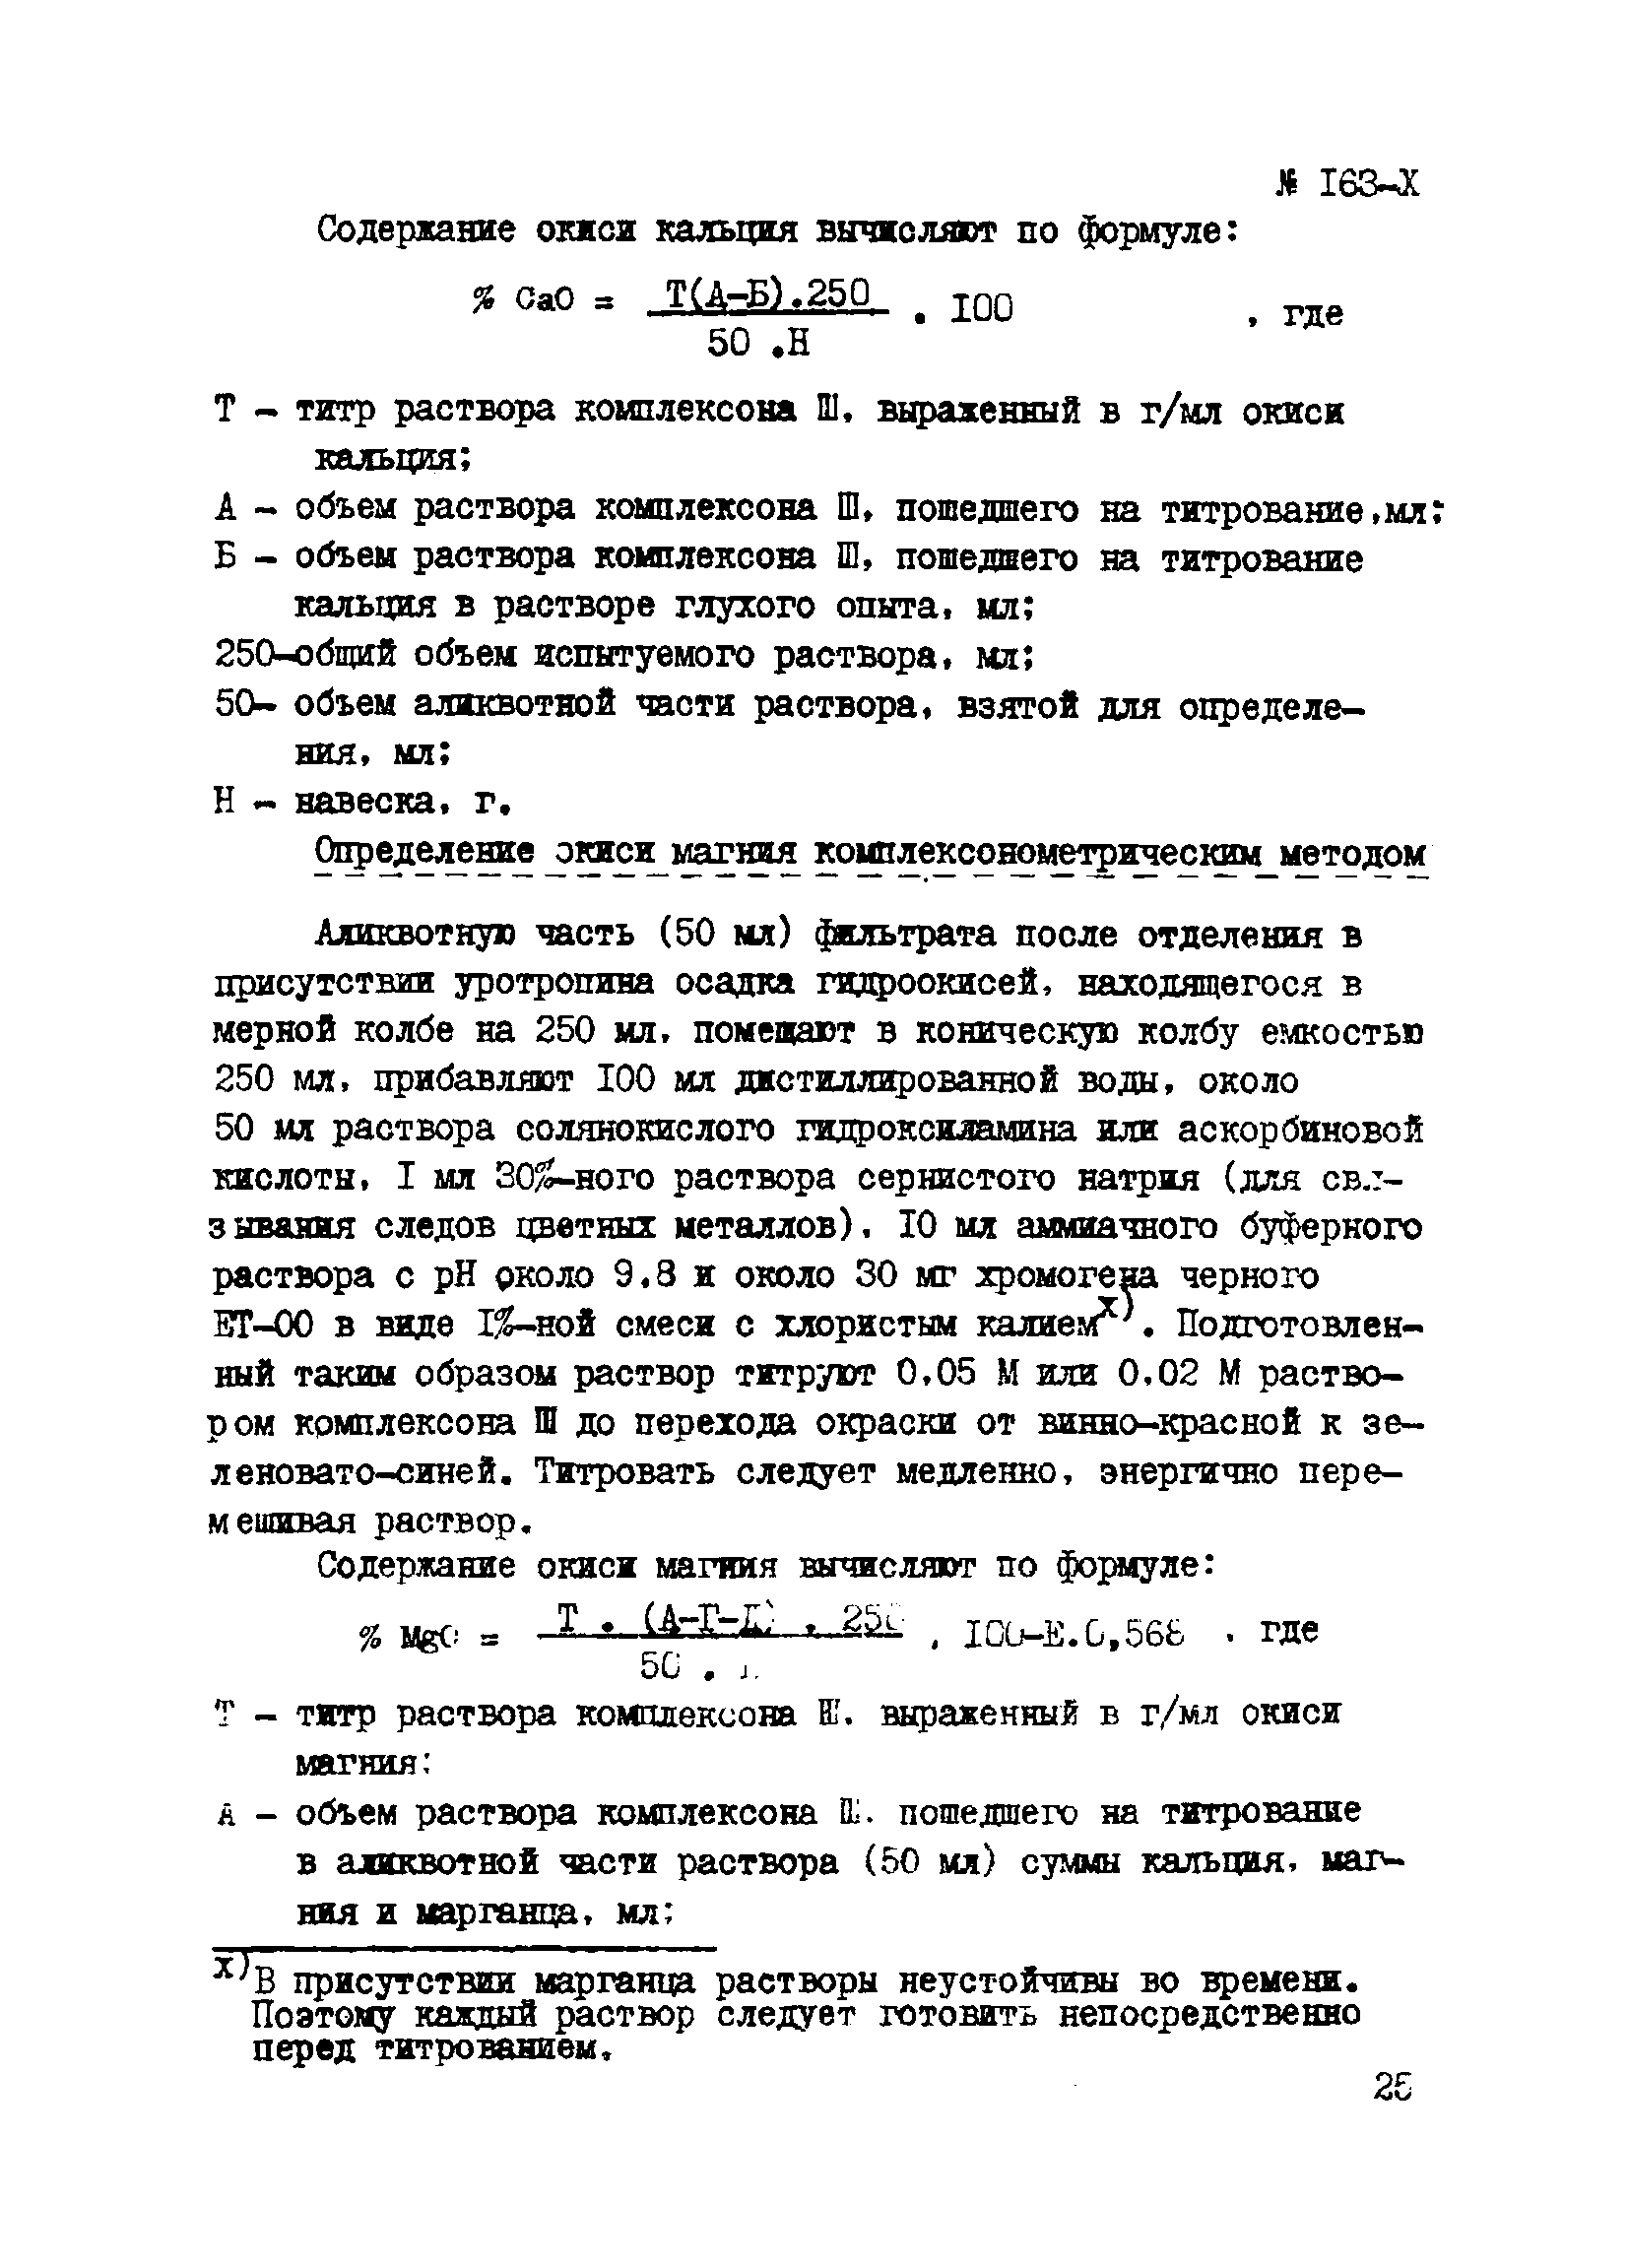 Инструкция НСАМ 163-Х